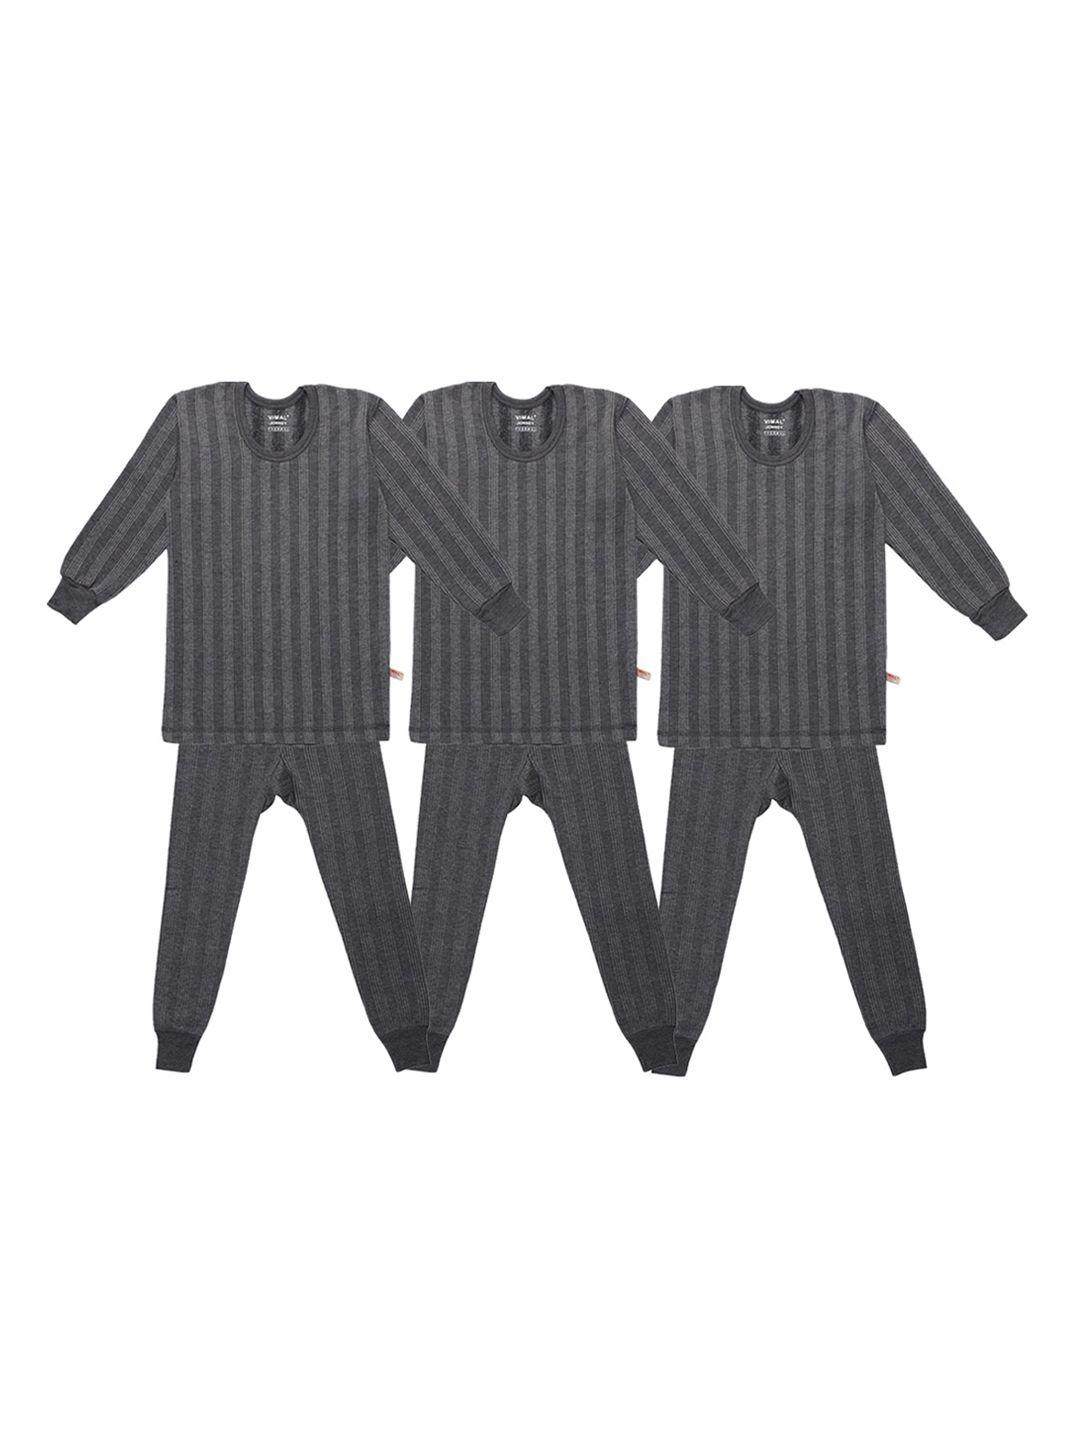 vimal jonney kids pack of 3 self striped cotton thermal sets